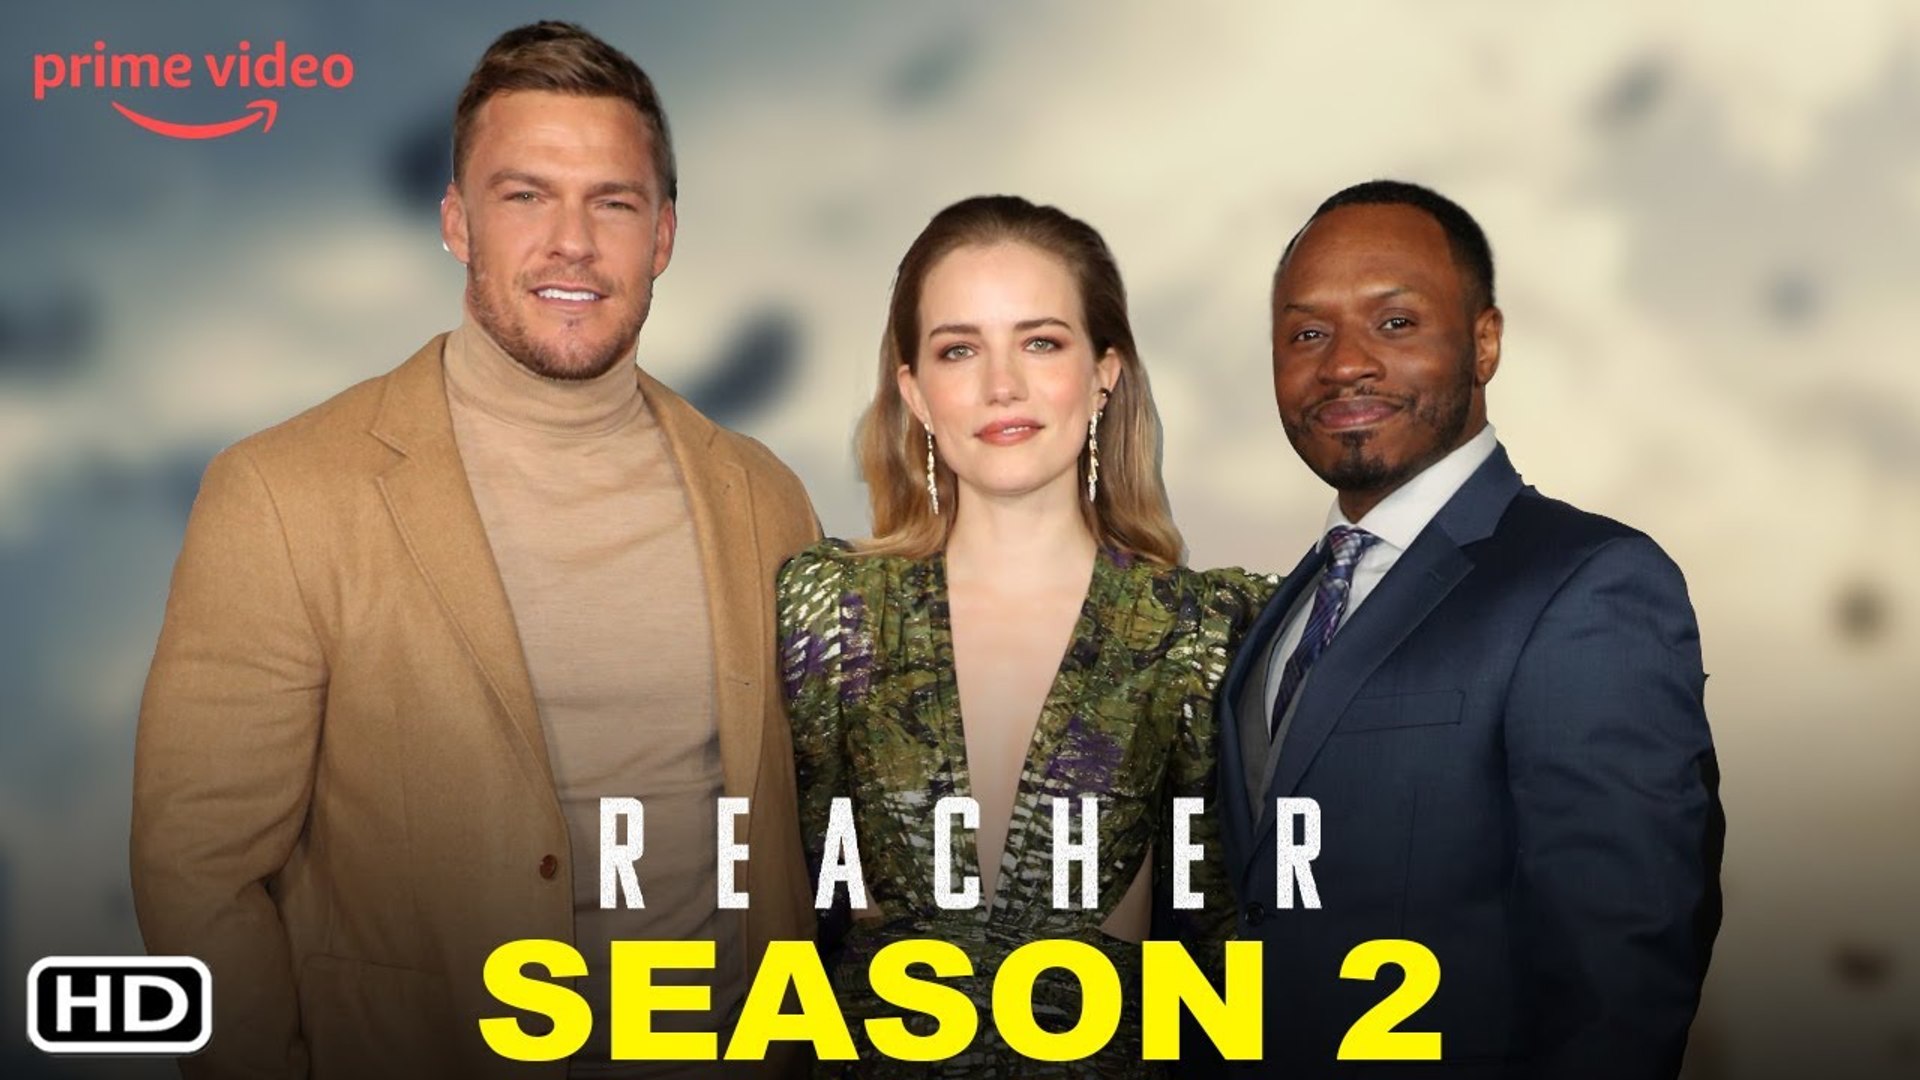 Prime Video: Reacher - Season 2